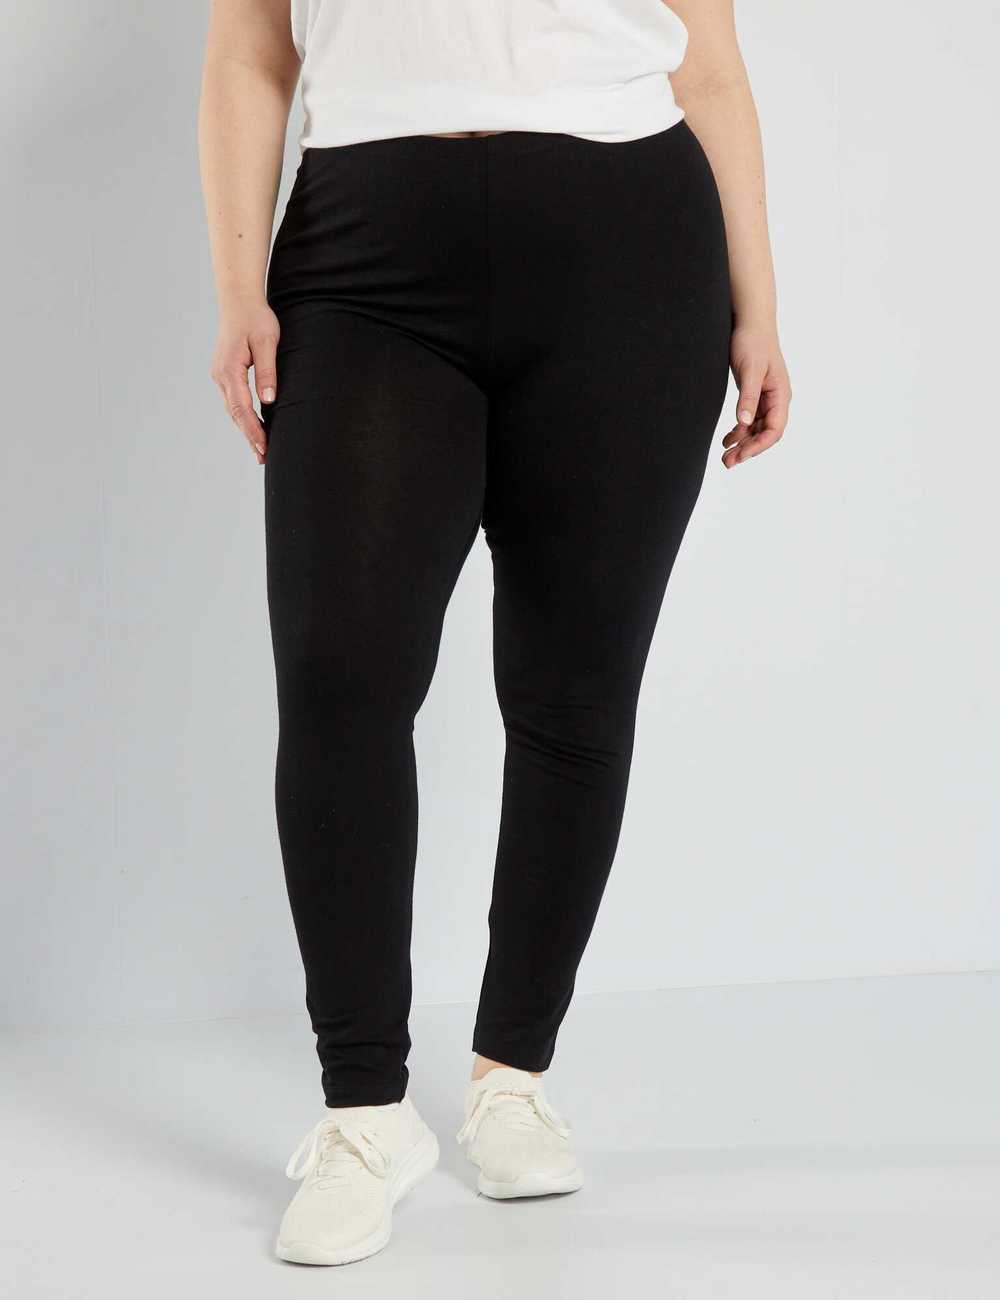 WOMEN NEW LADIES Plain High Cotton Legging Stretch Full Length Size S,M,L,Xl ,Xxl £7.99 - PicClick UK